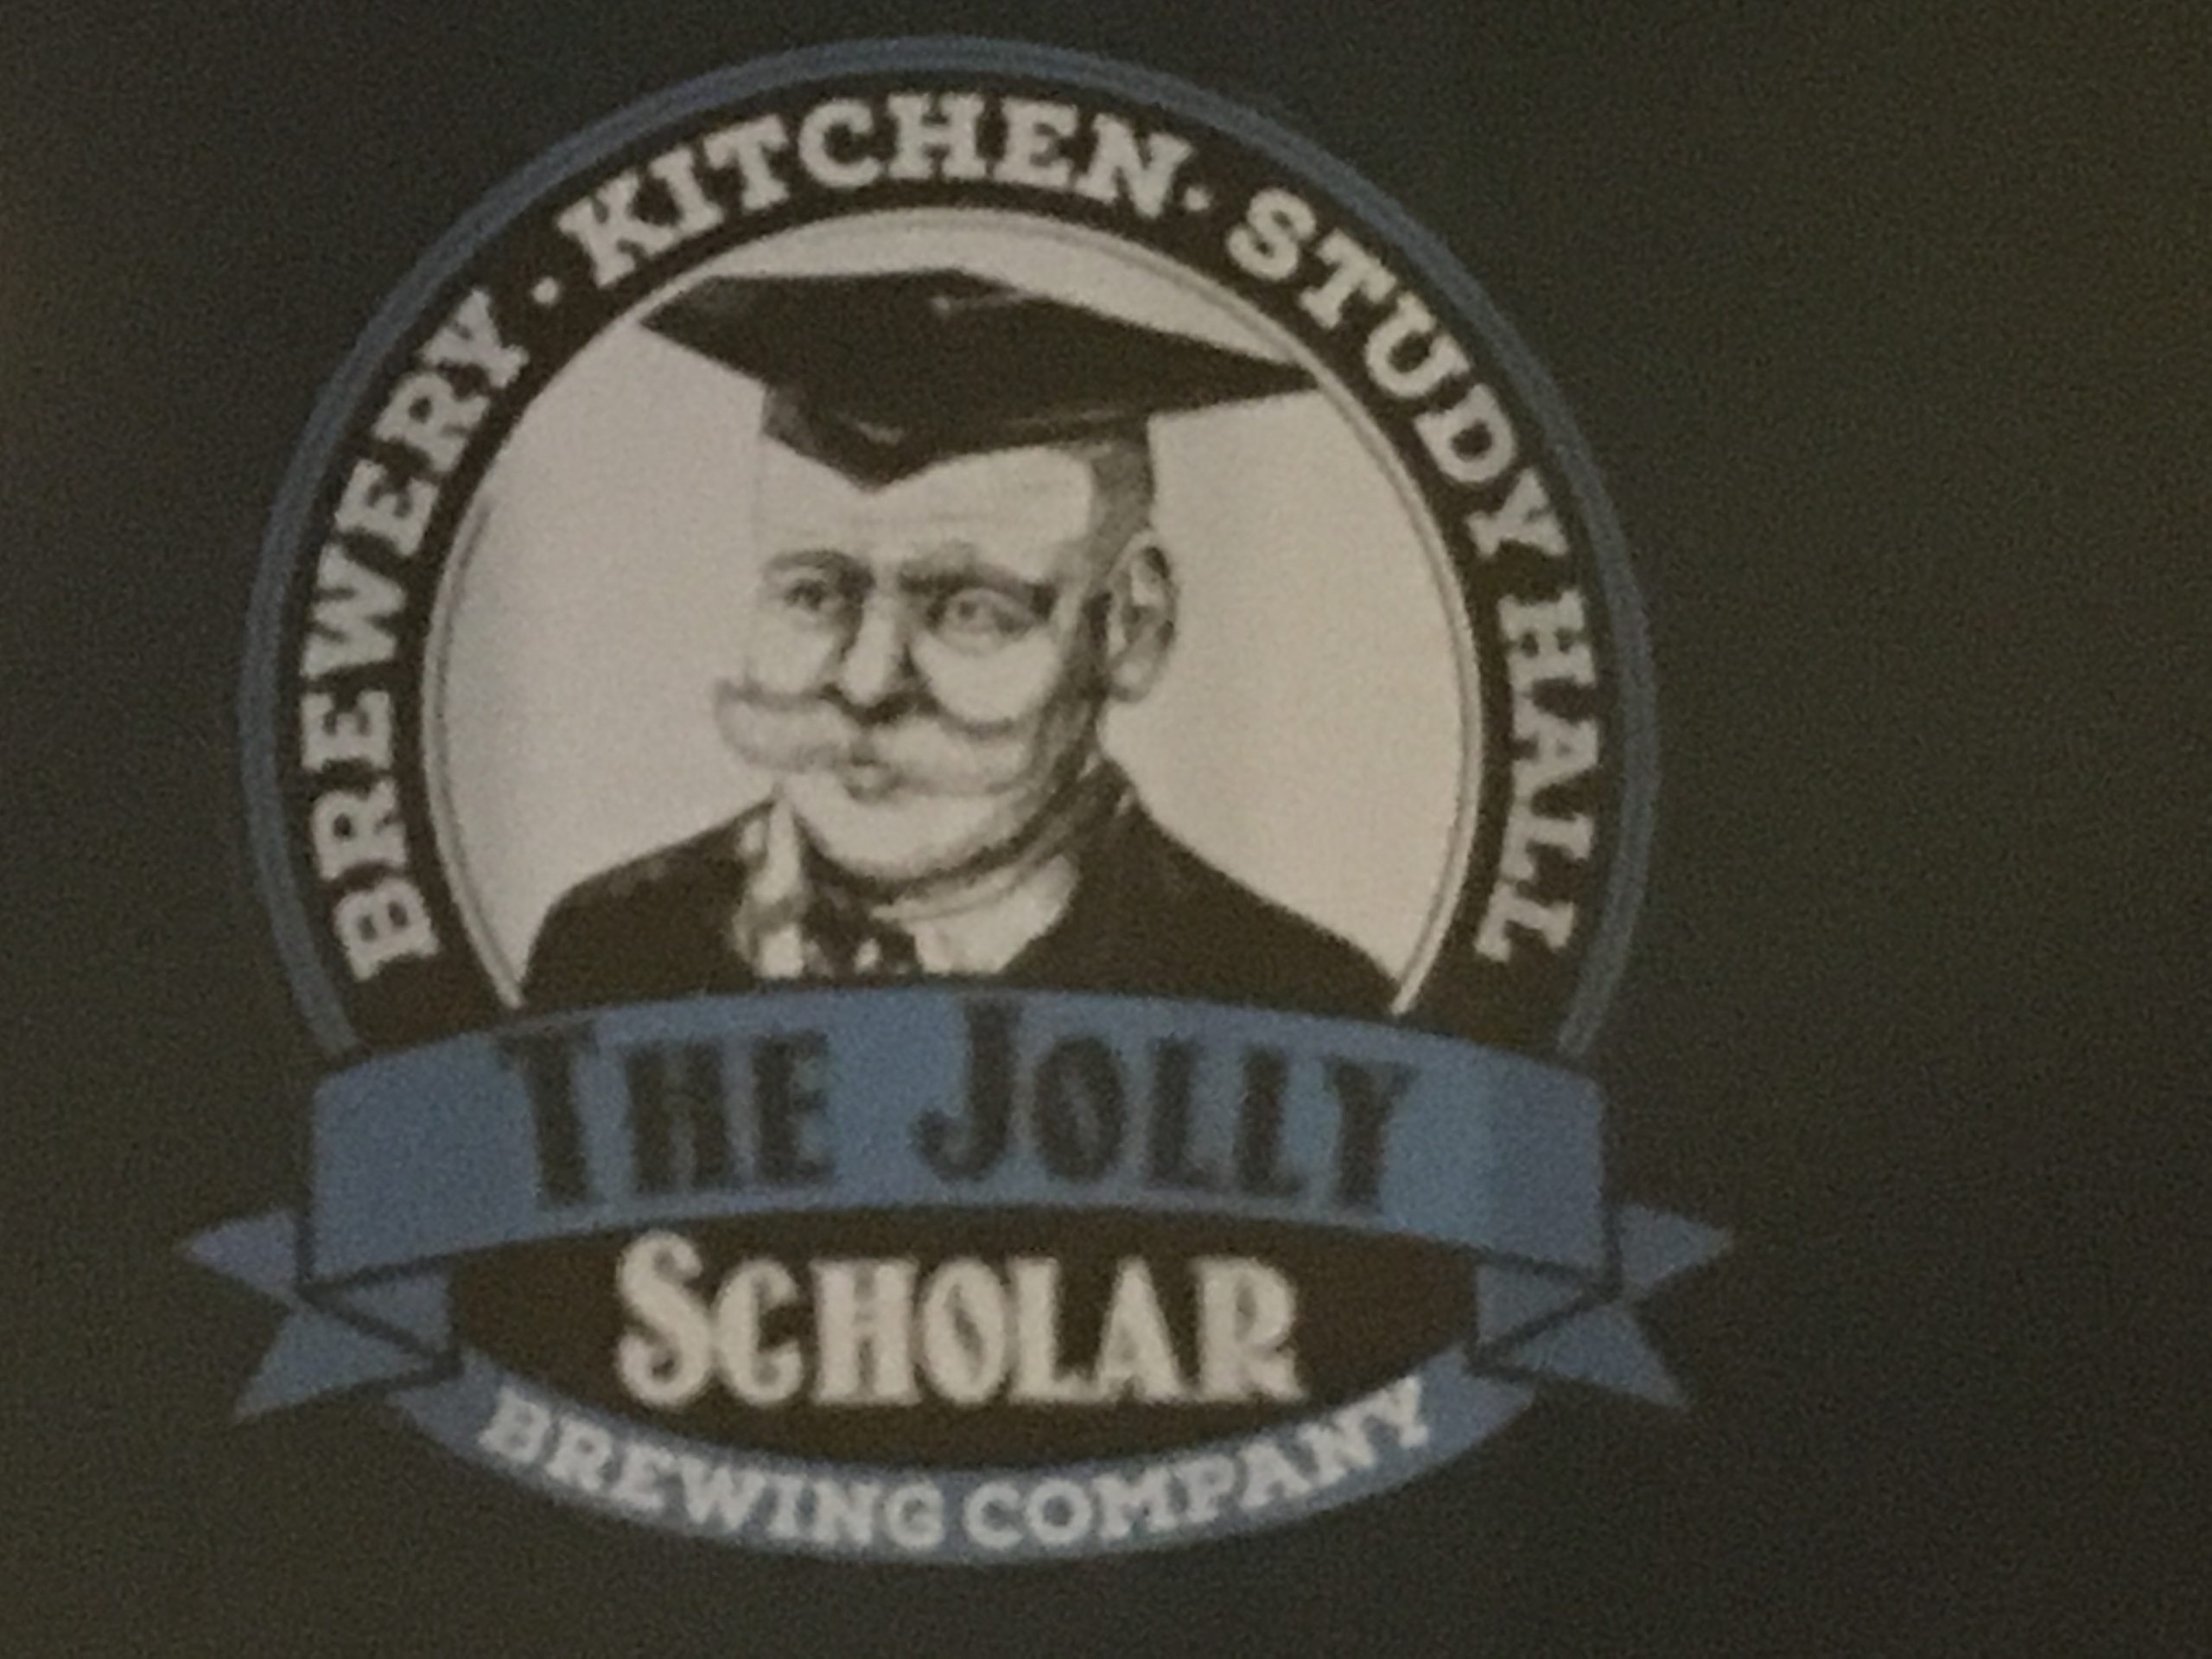 Jolly Scholar